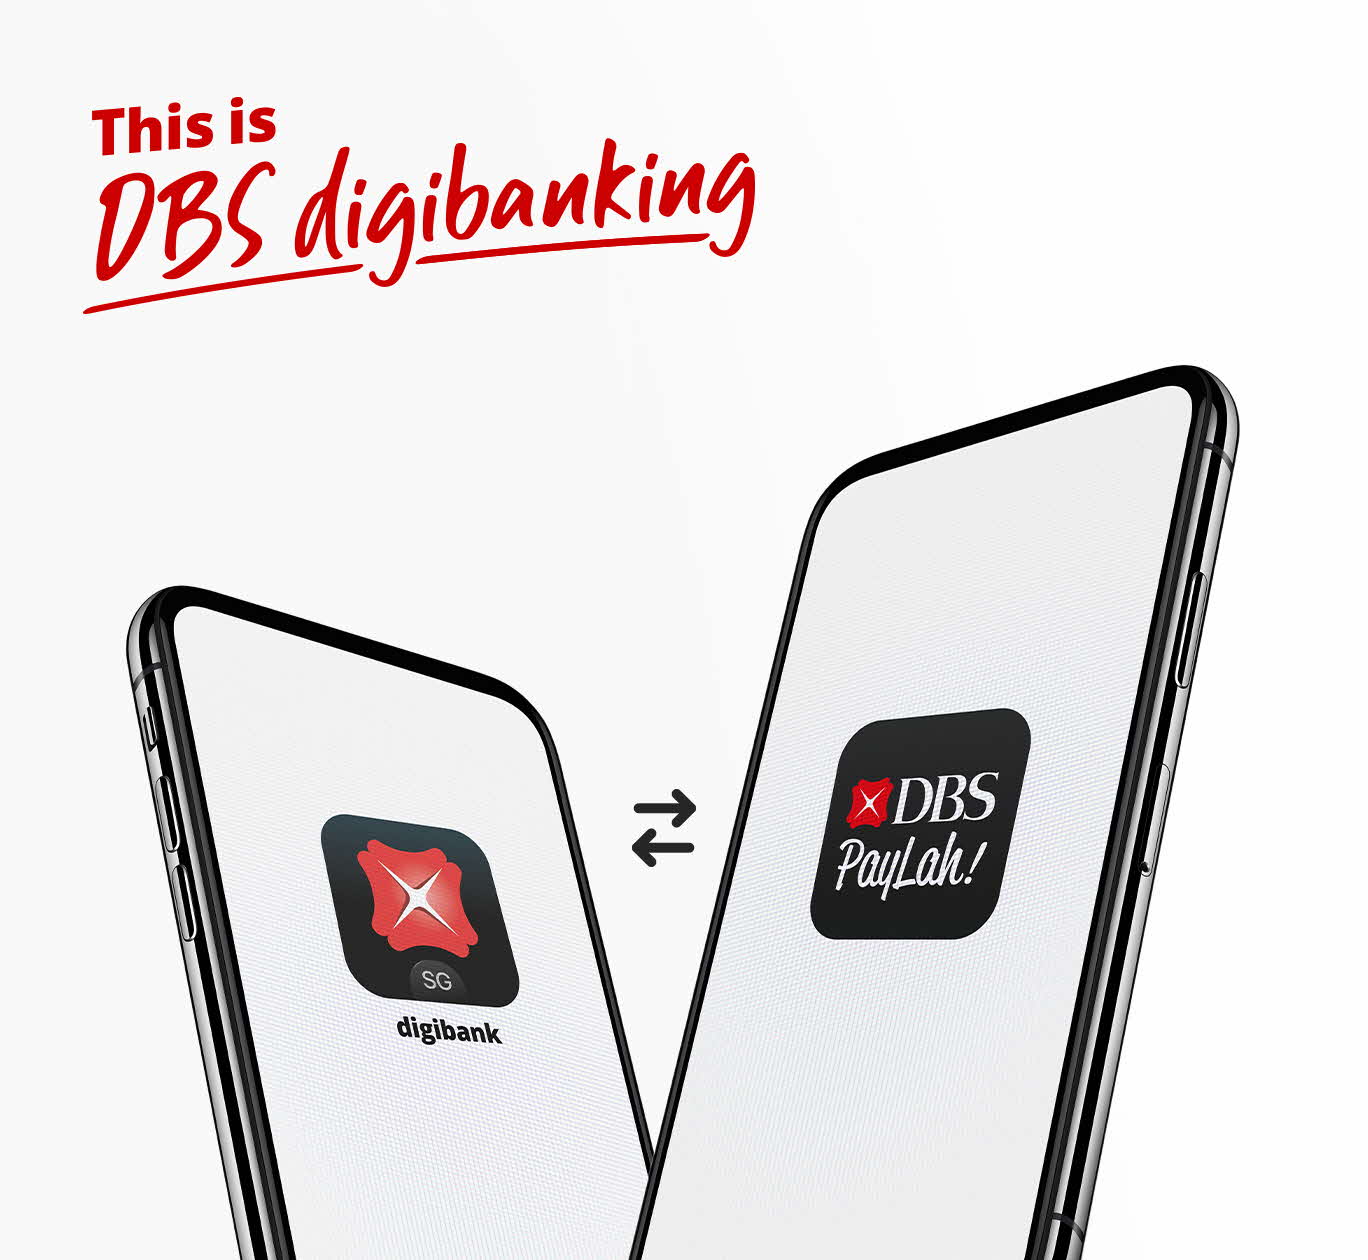 DBS Digibank